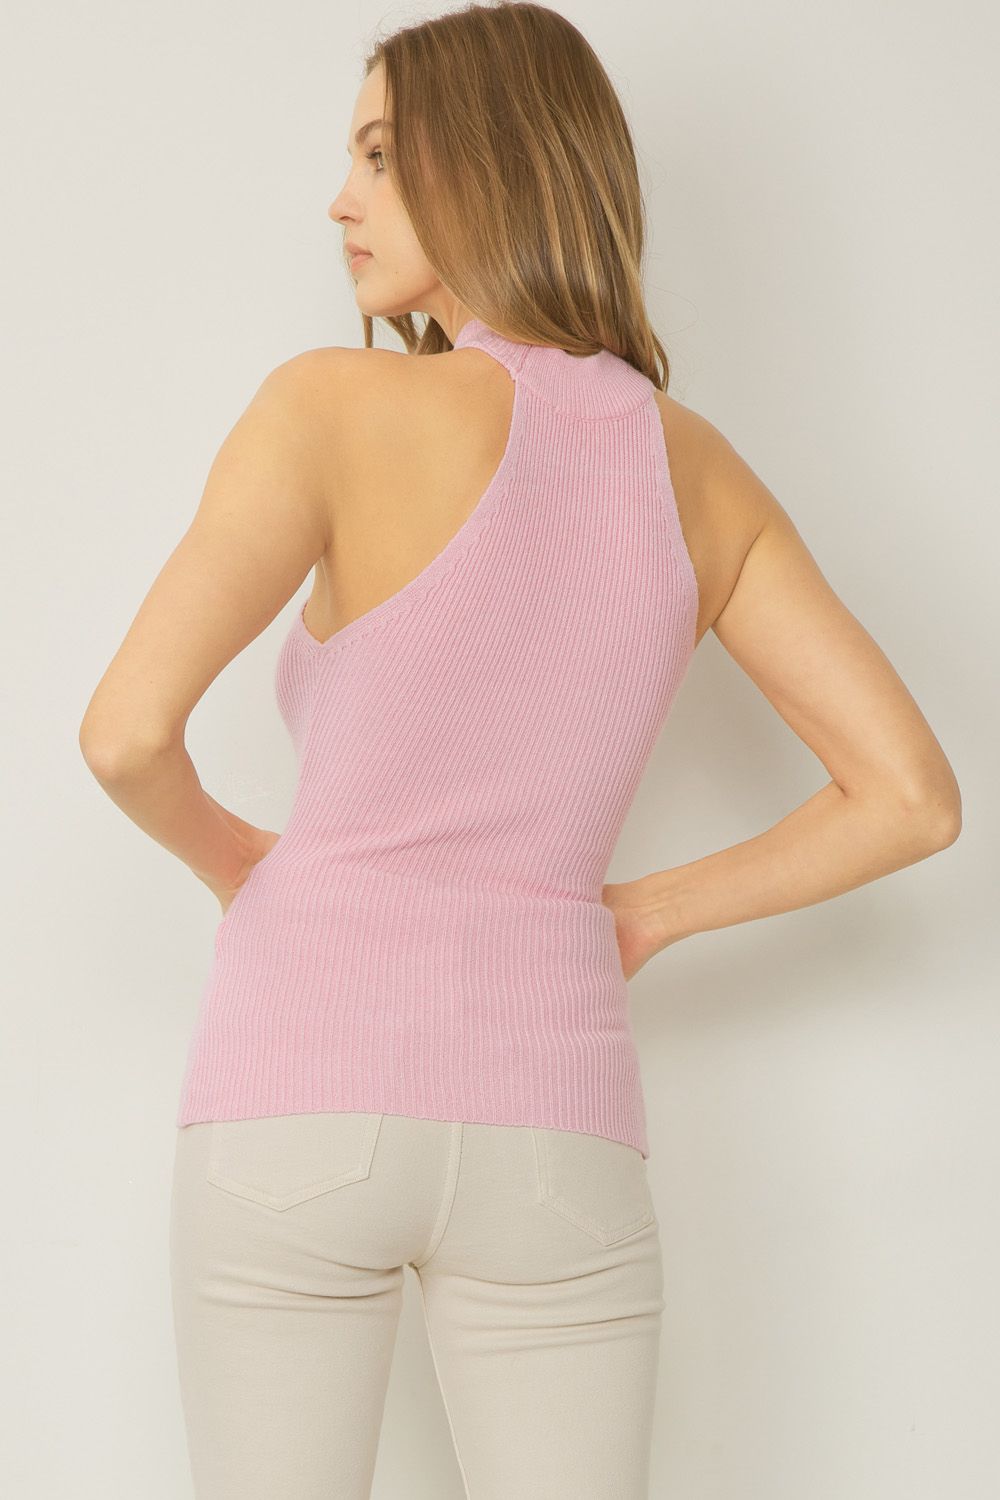 Pink Ribbed Sleeveless Knit Top